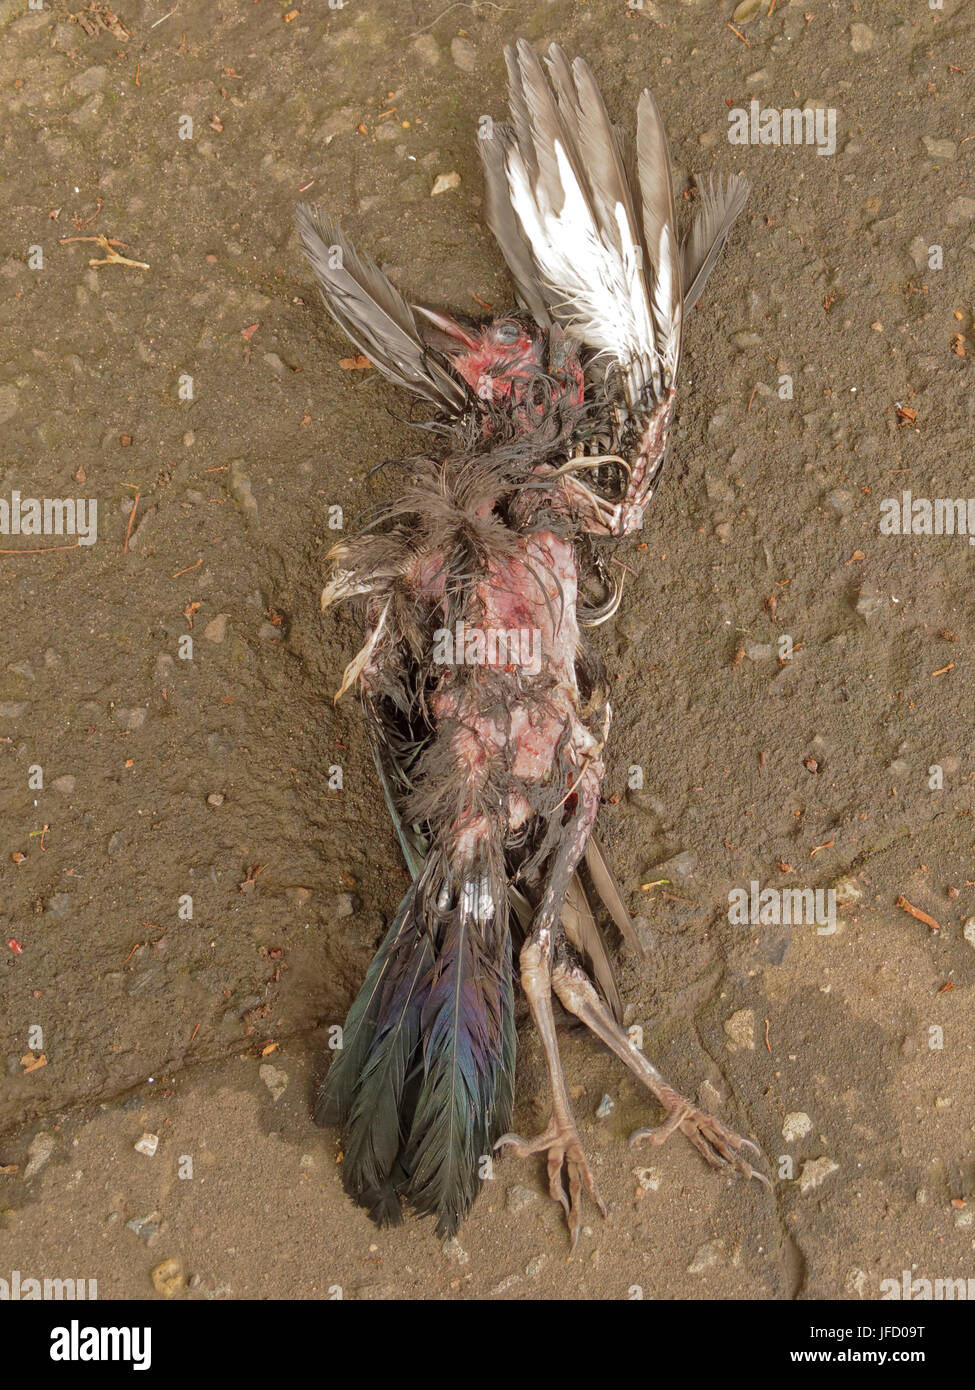 dead bird roadkill putrid decaying carcass beak claws legs fly on eye Stock Photo